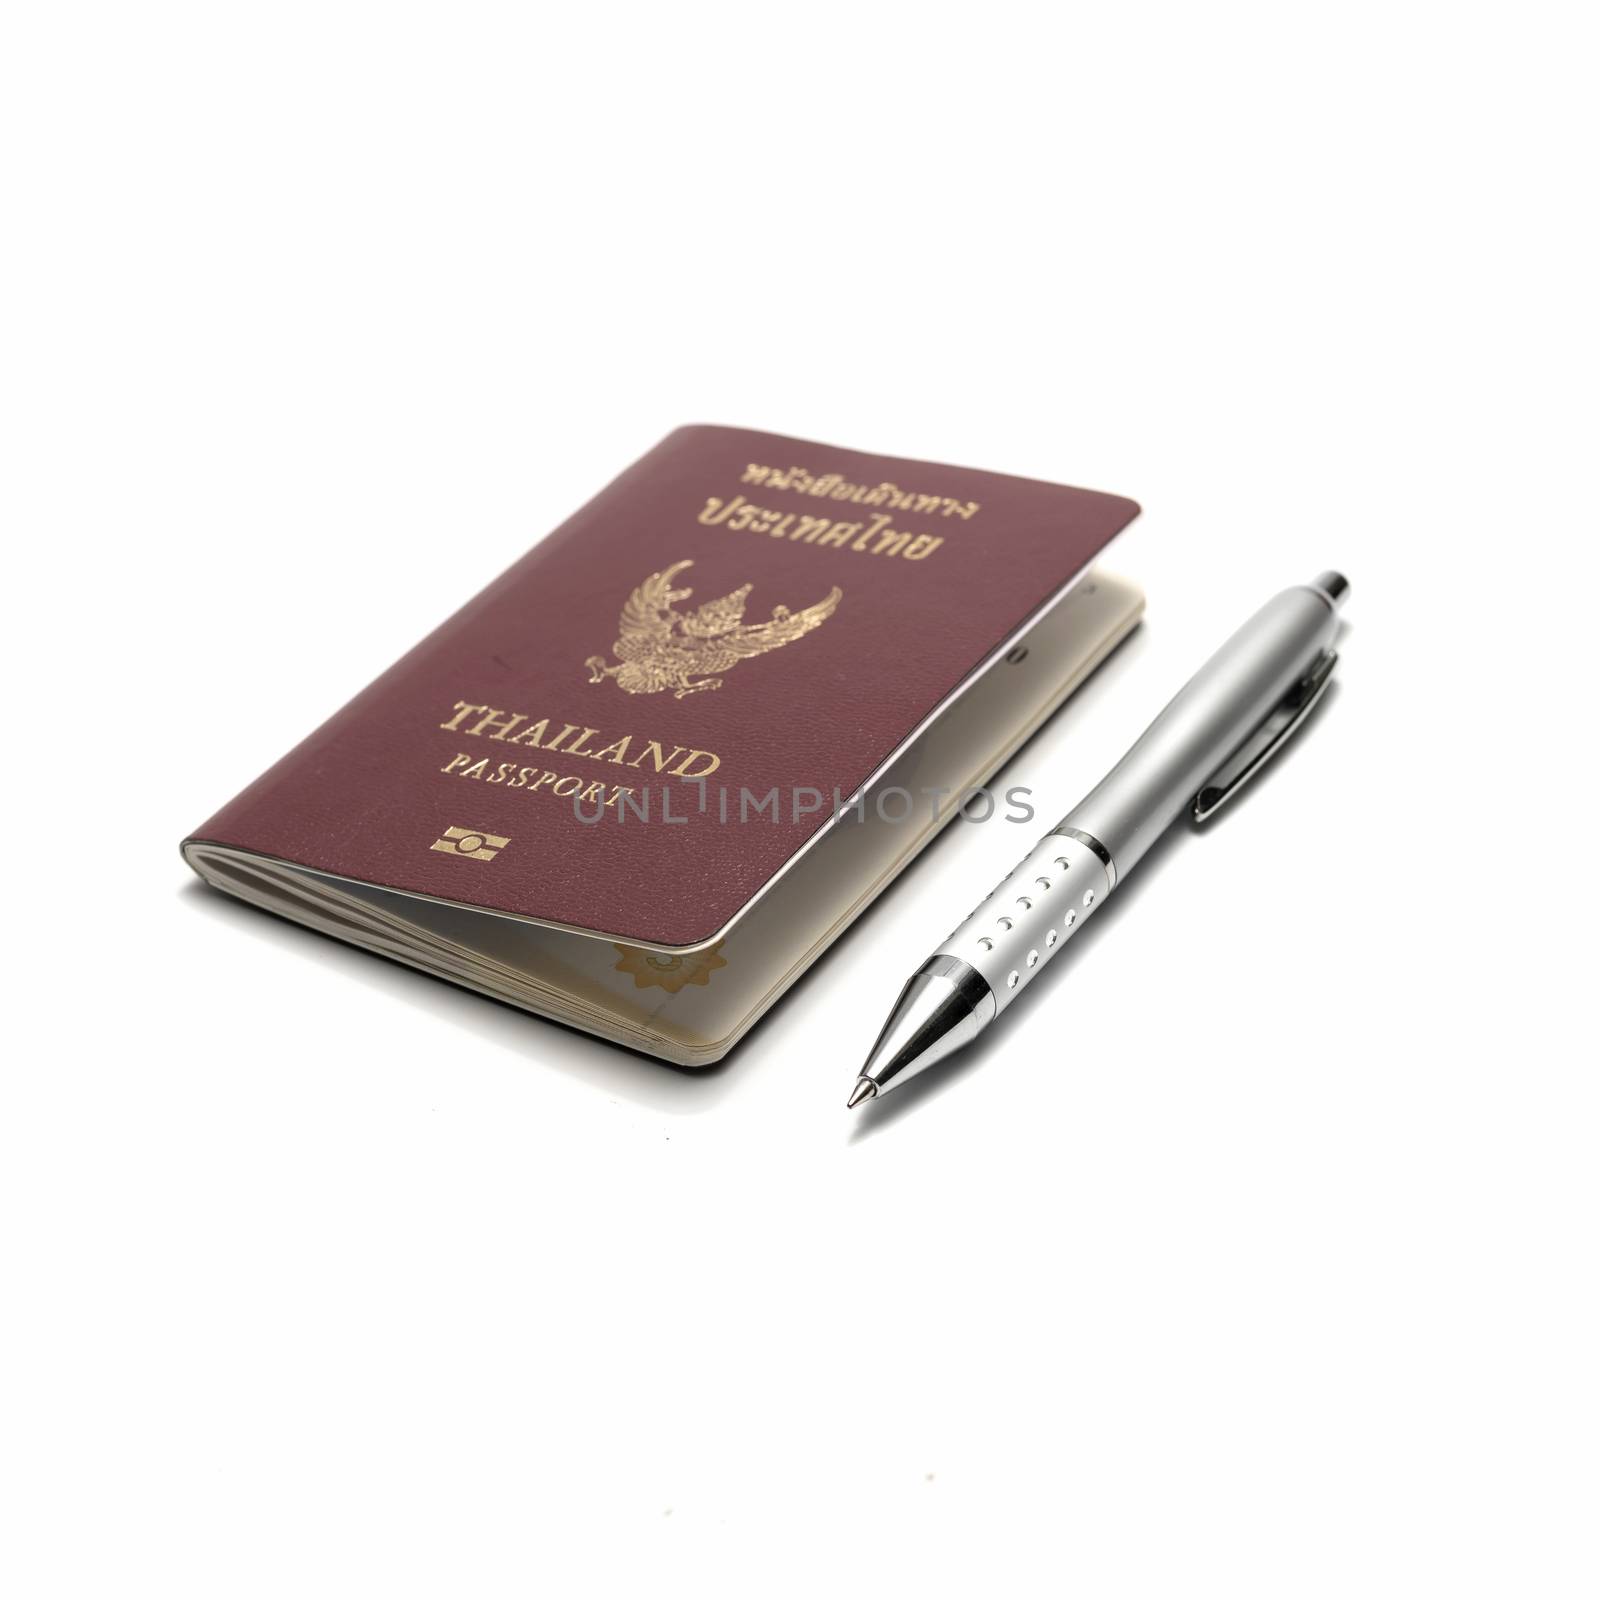 passport and pen by ammza12